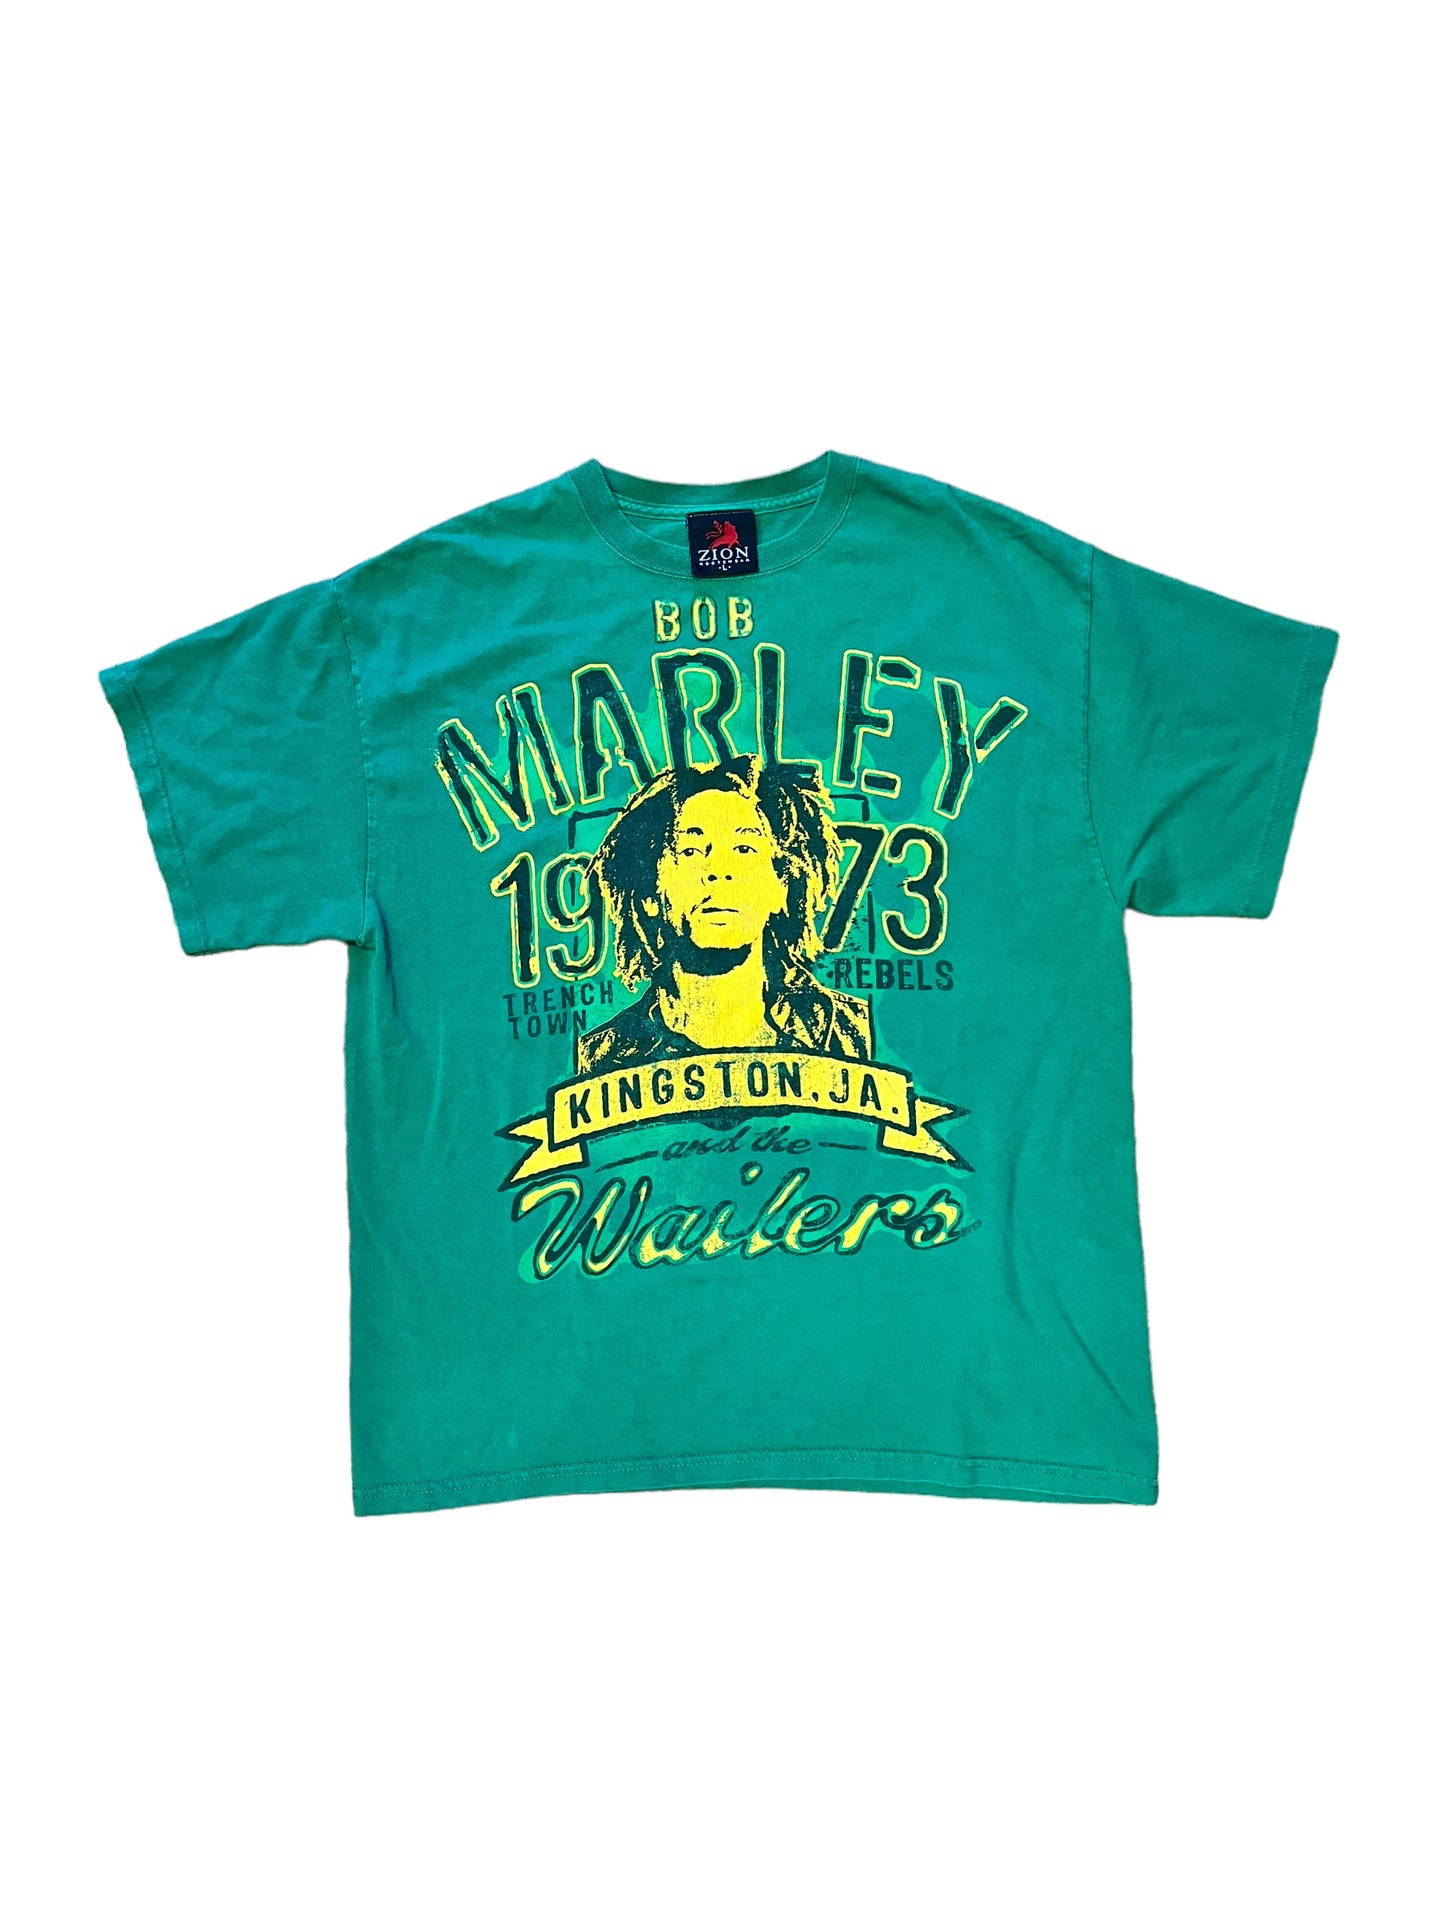 Vintage Bob Marley and The Wailers Tee - Large